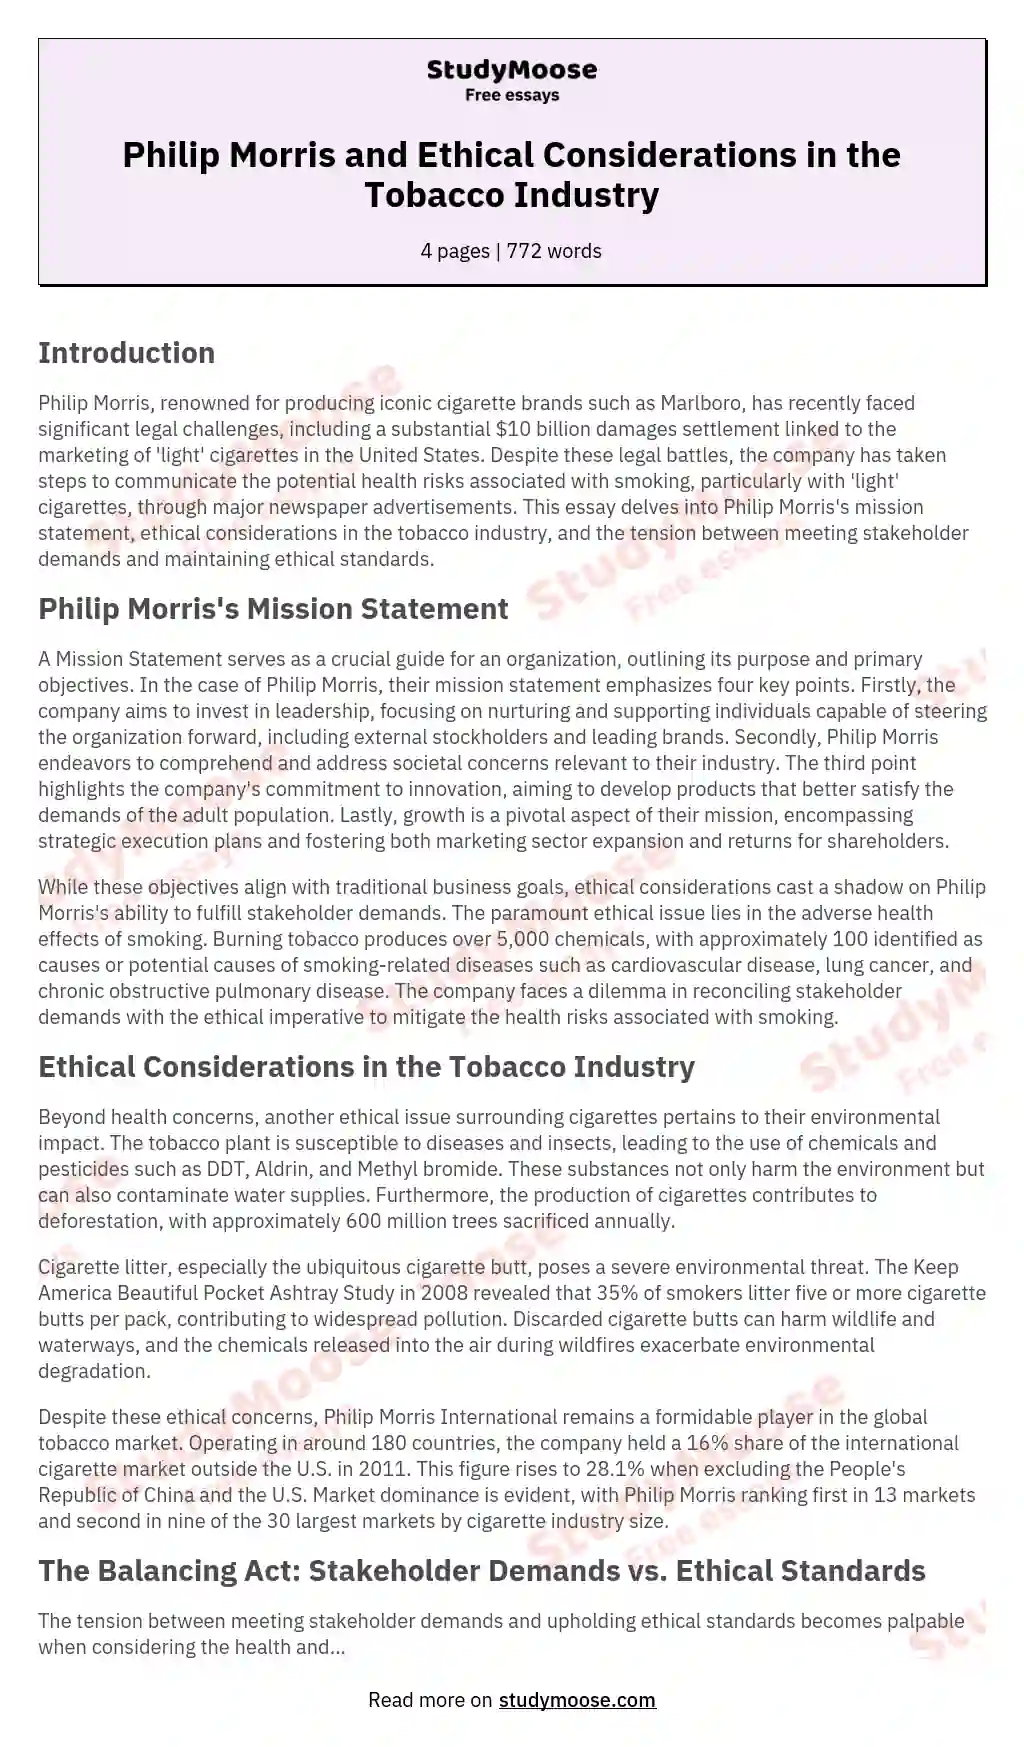 Philip Morris and Mission Statement